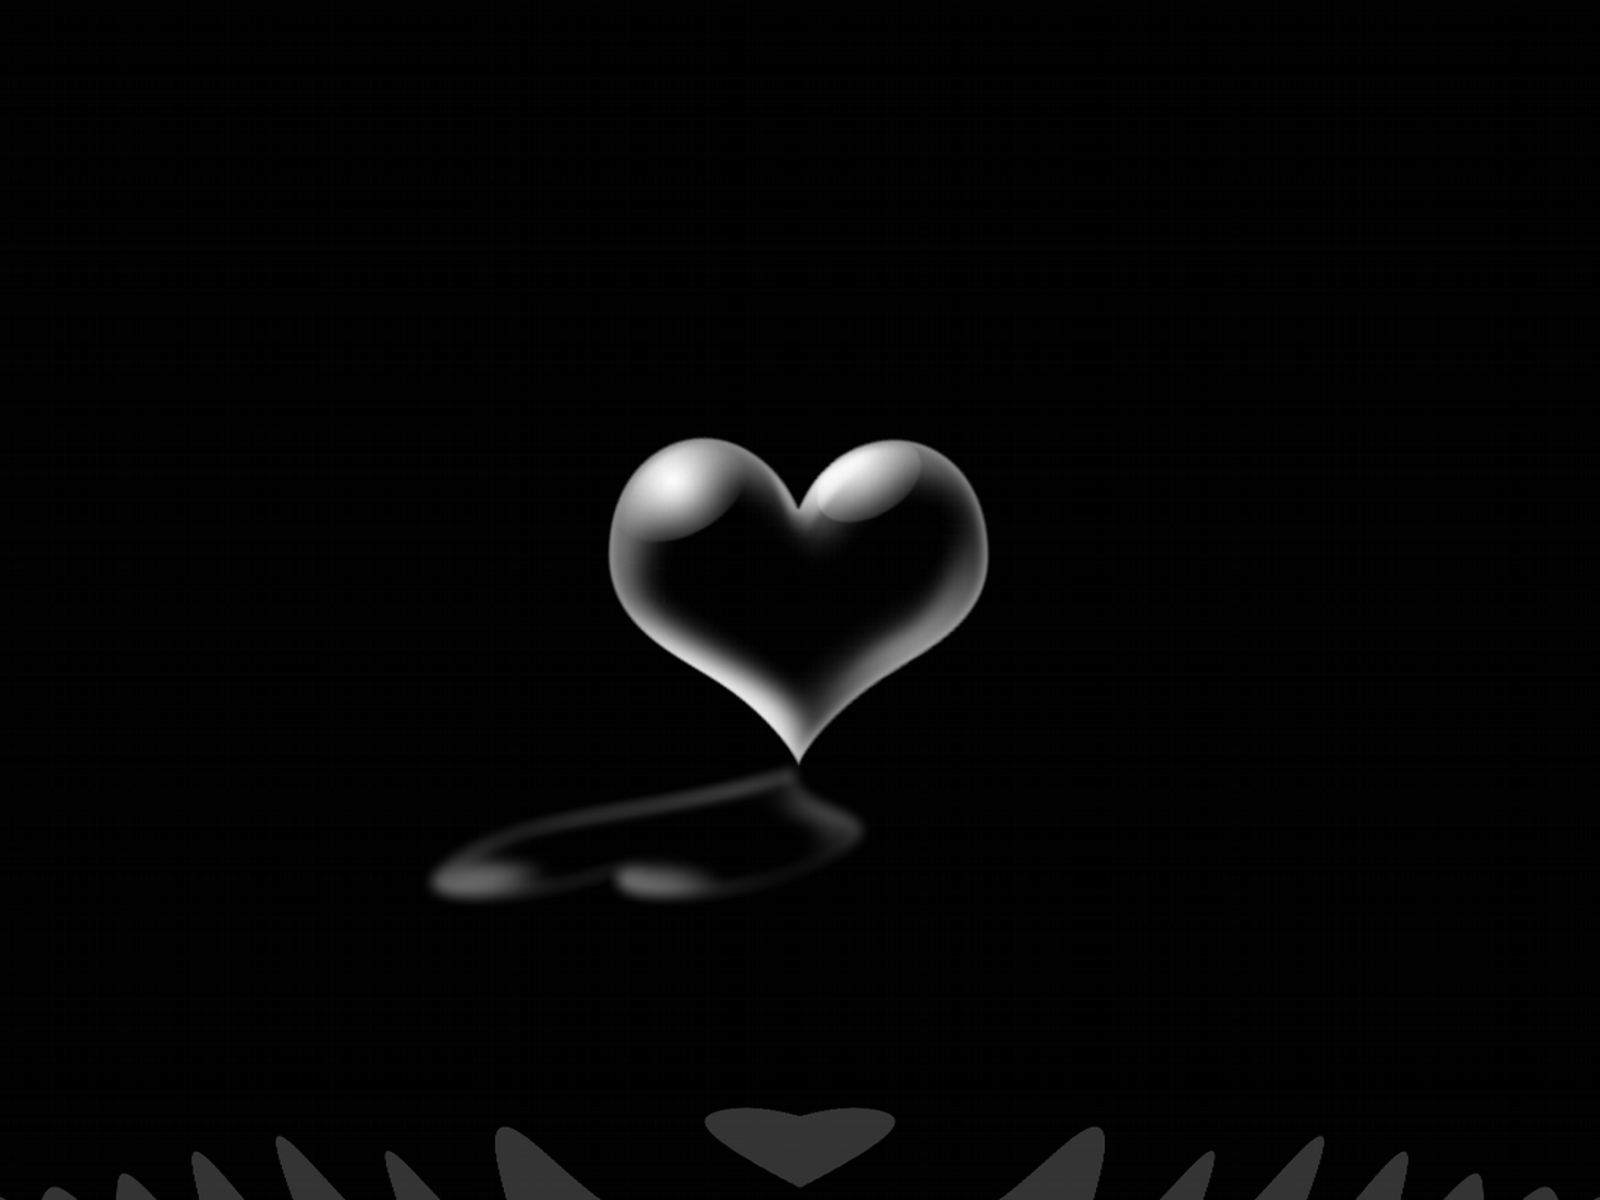 Black Heart. Heart wallpaper, Dark heart, Black wallpaper